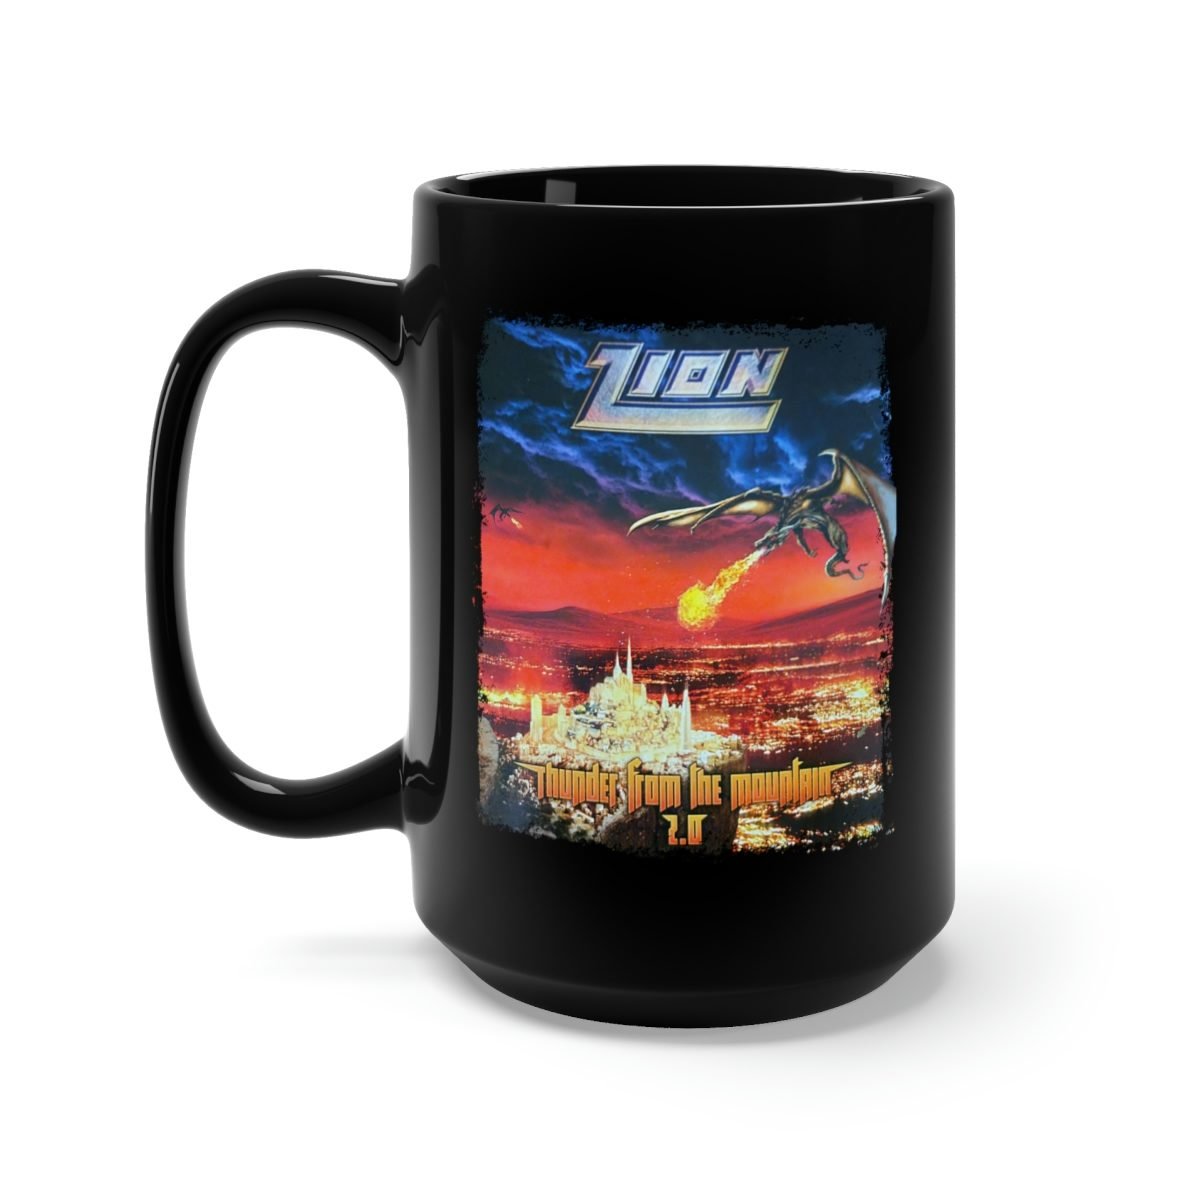 Zion – Thunder From The Mountain 2.0 15oz Black Mug